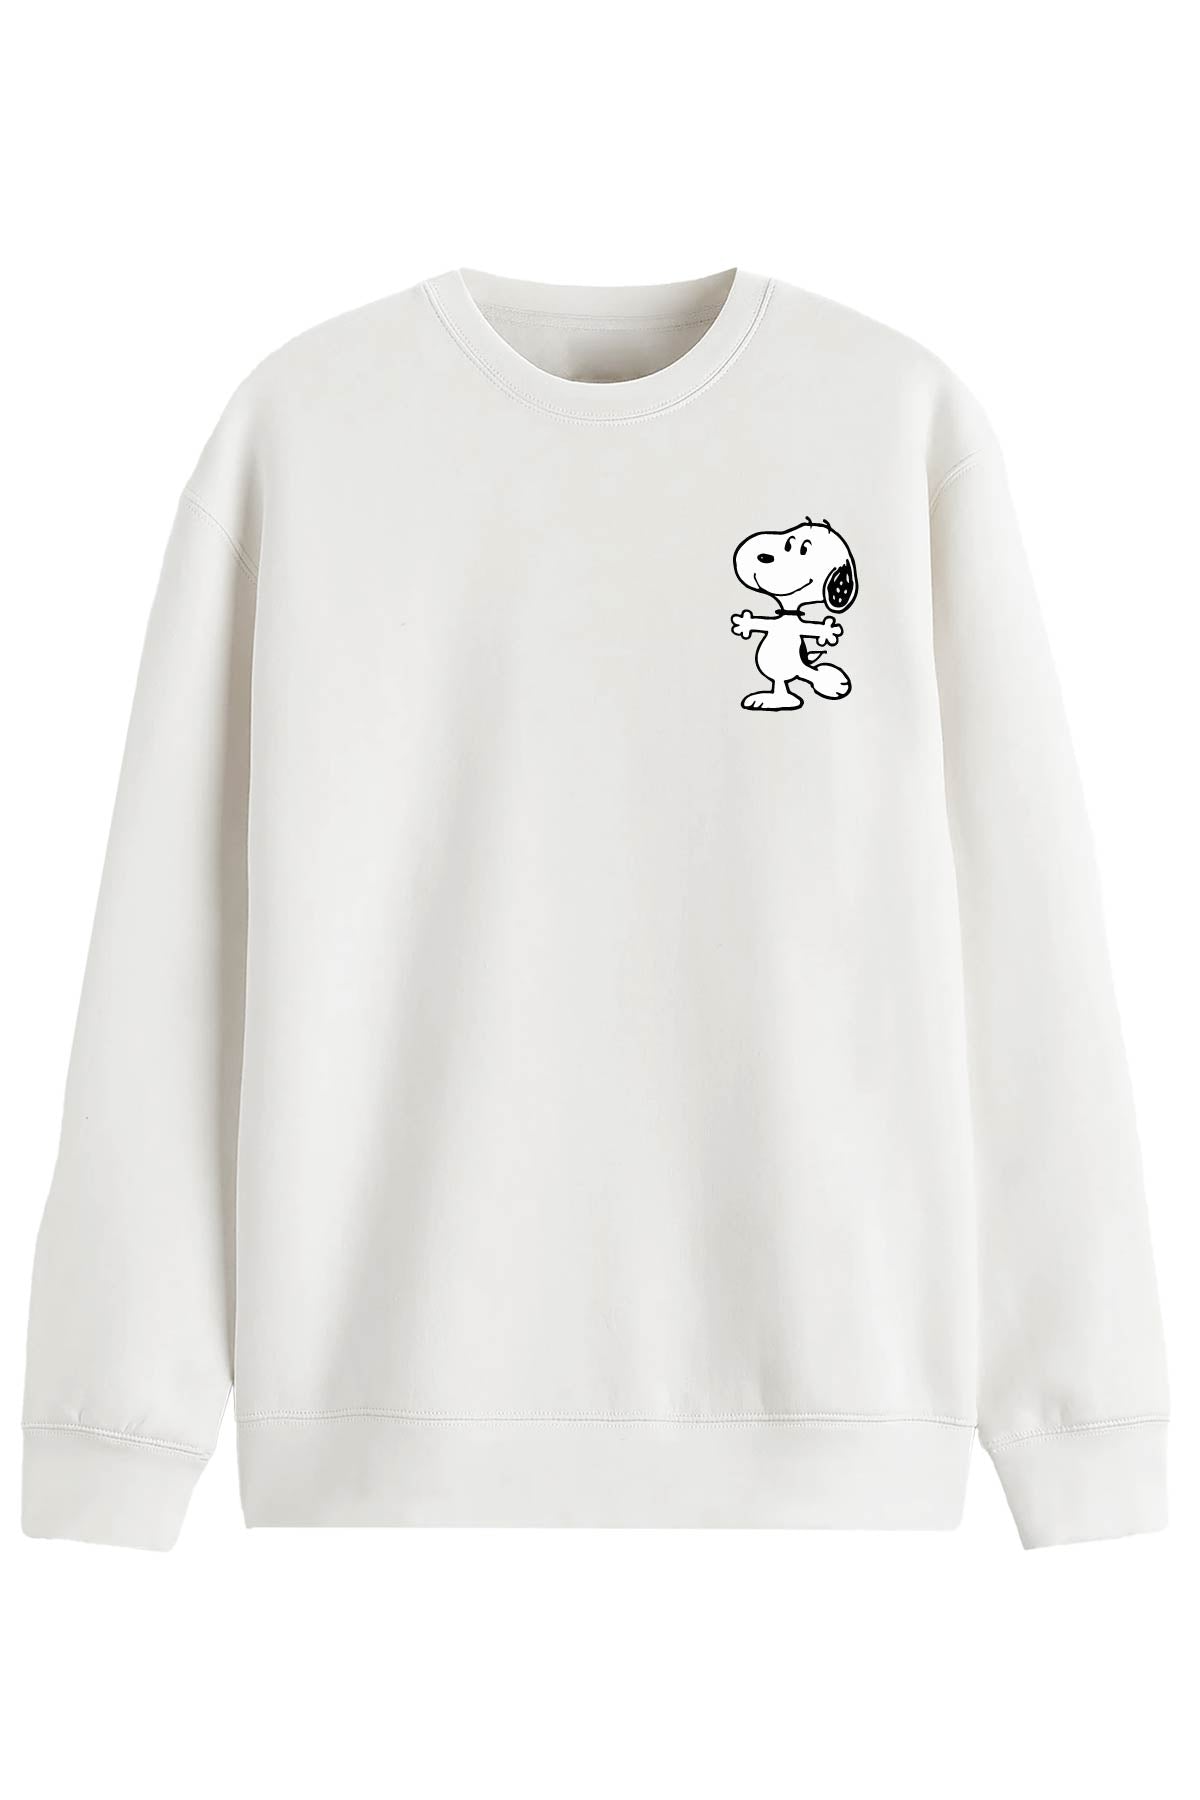 Peanuts/ Snoppy -  Sweatshirt